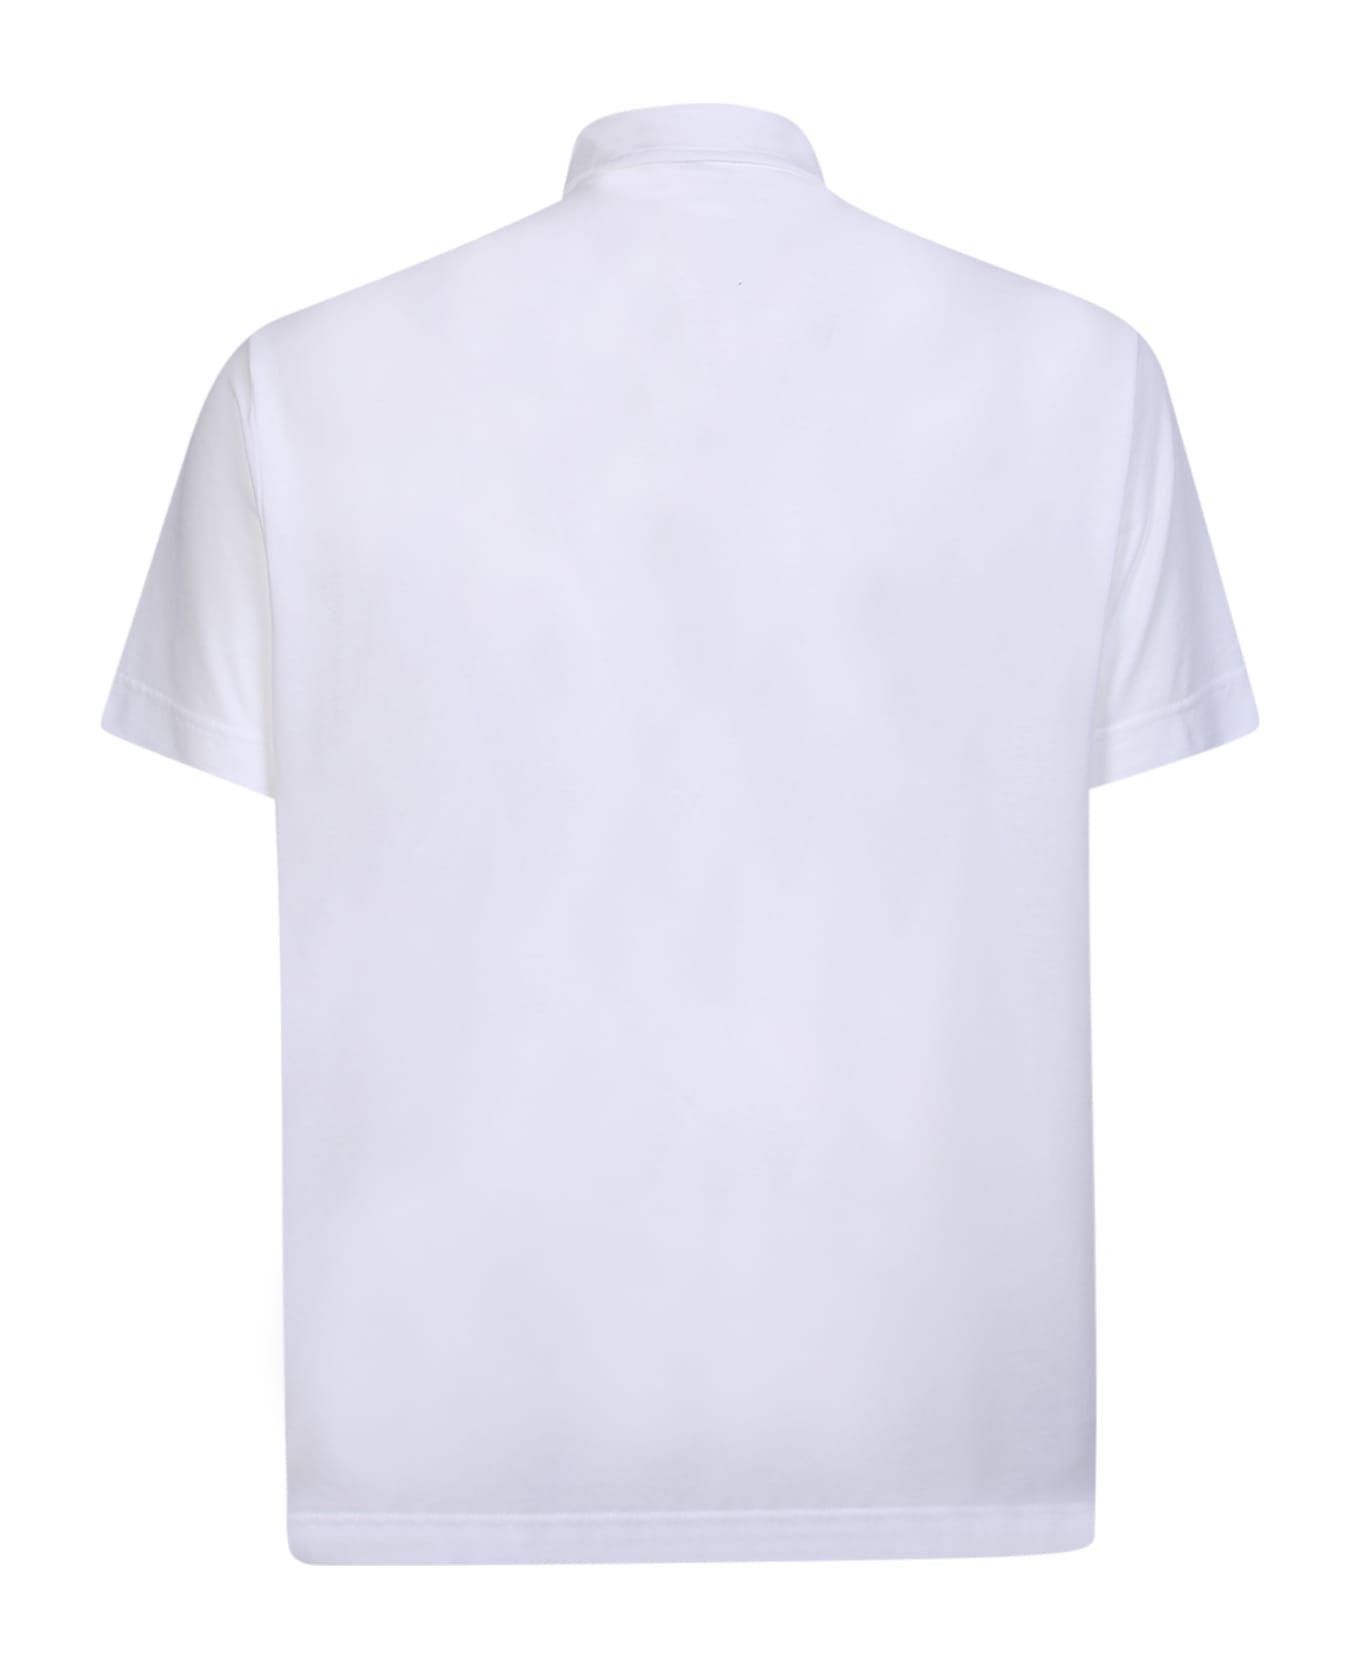 Zanone White Polo Shirt - White